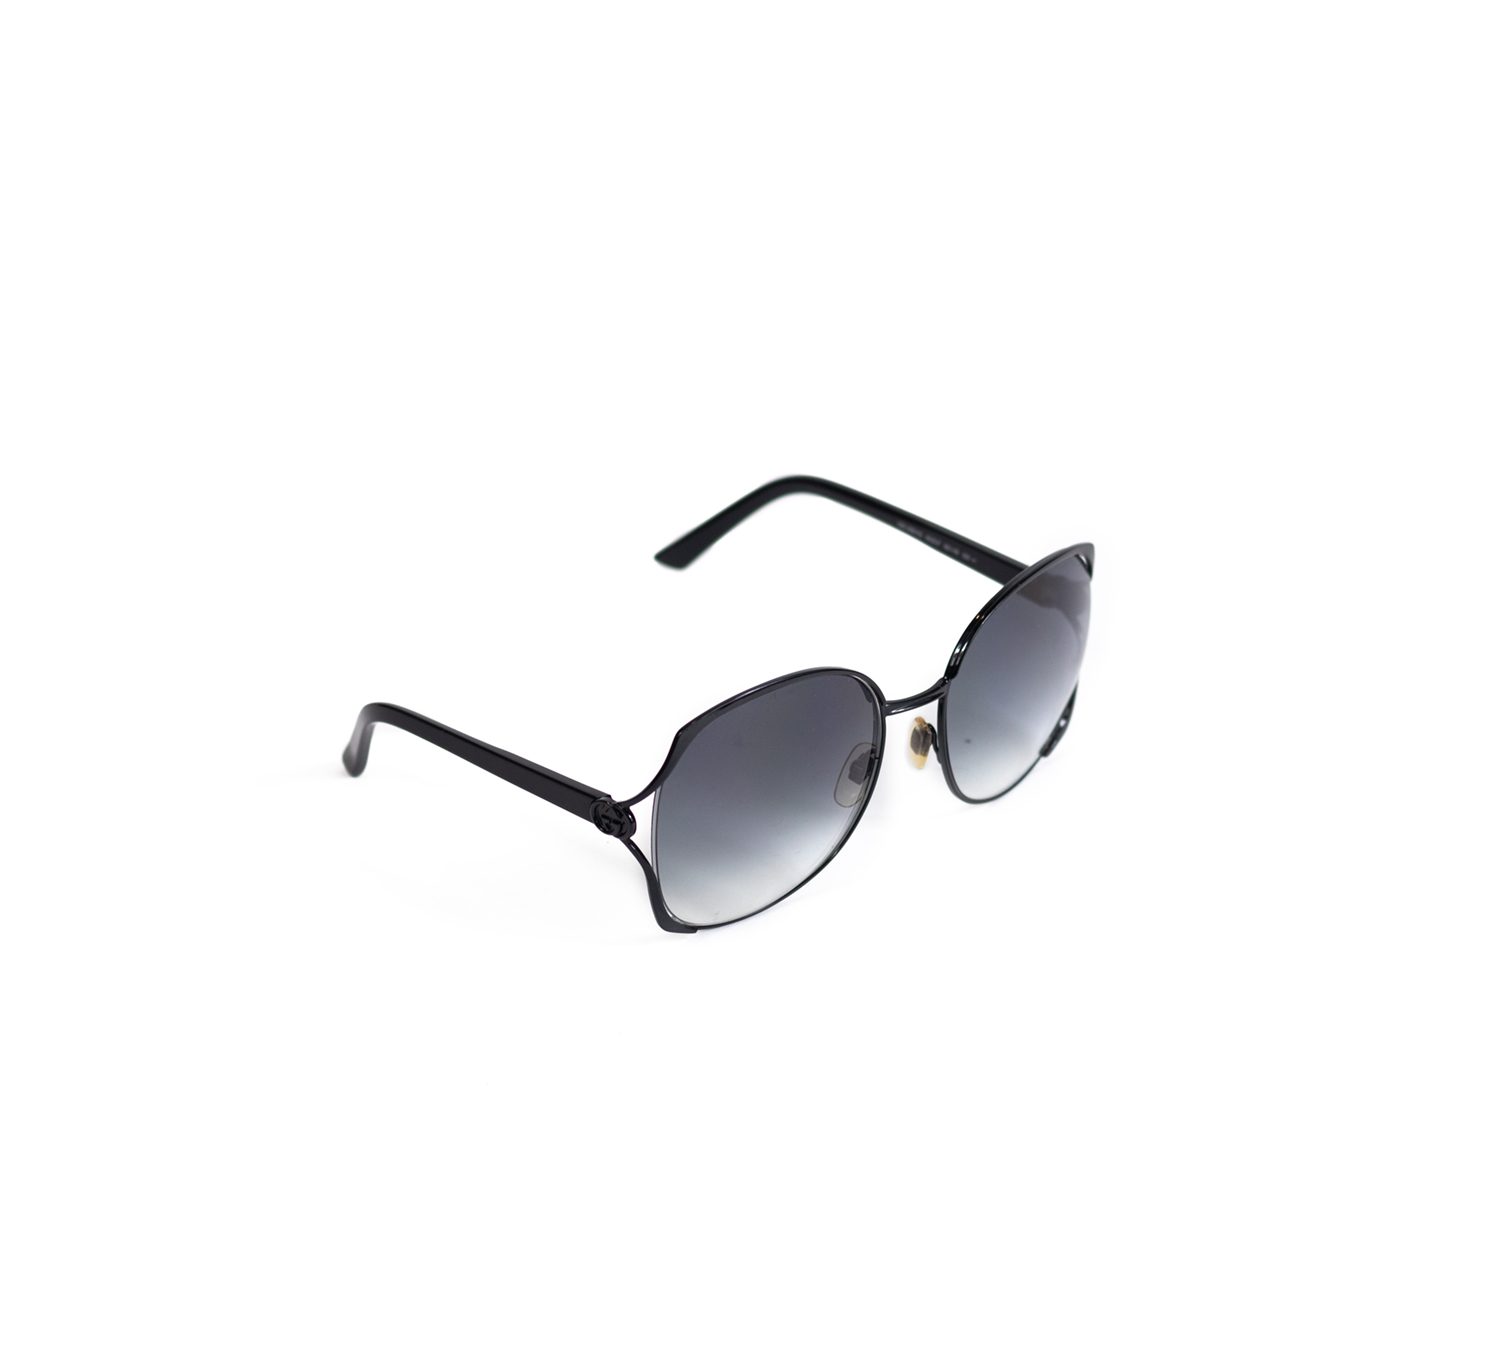 Black GG logo Sunglasses